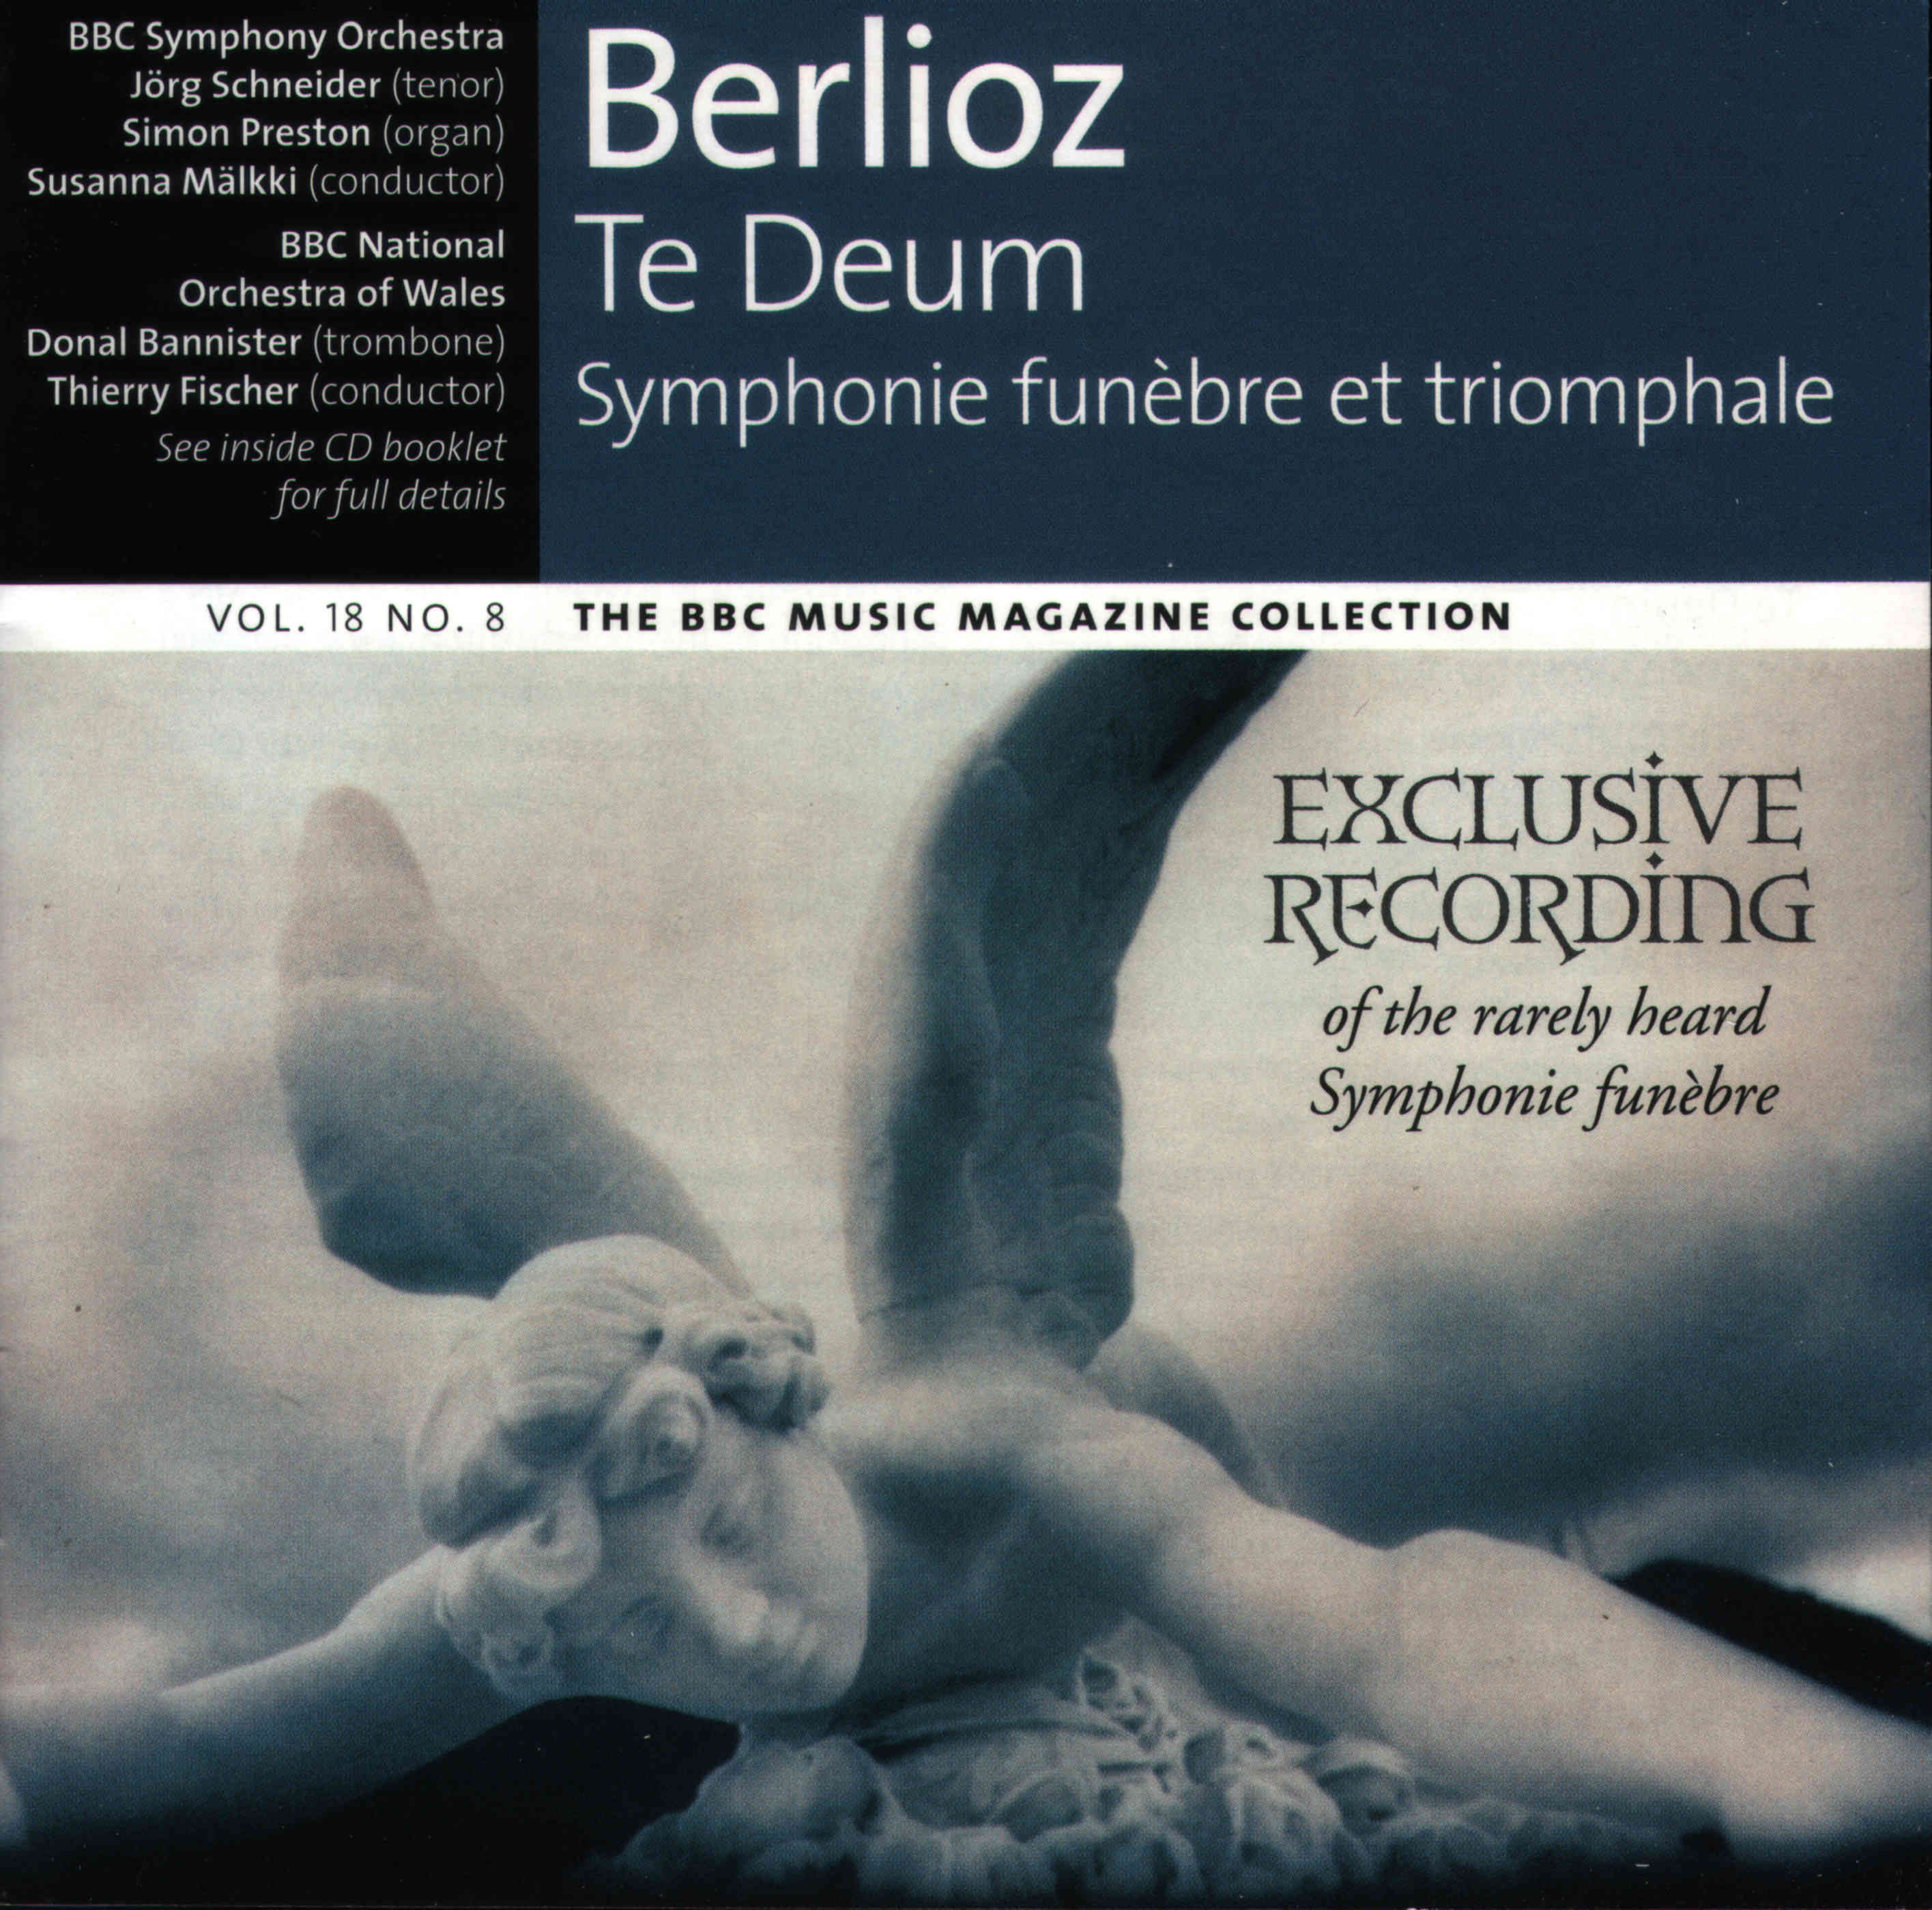 Berlioz Te Deum Symphonie funebre et triomphale